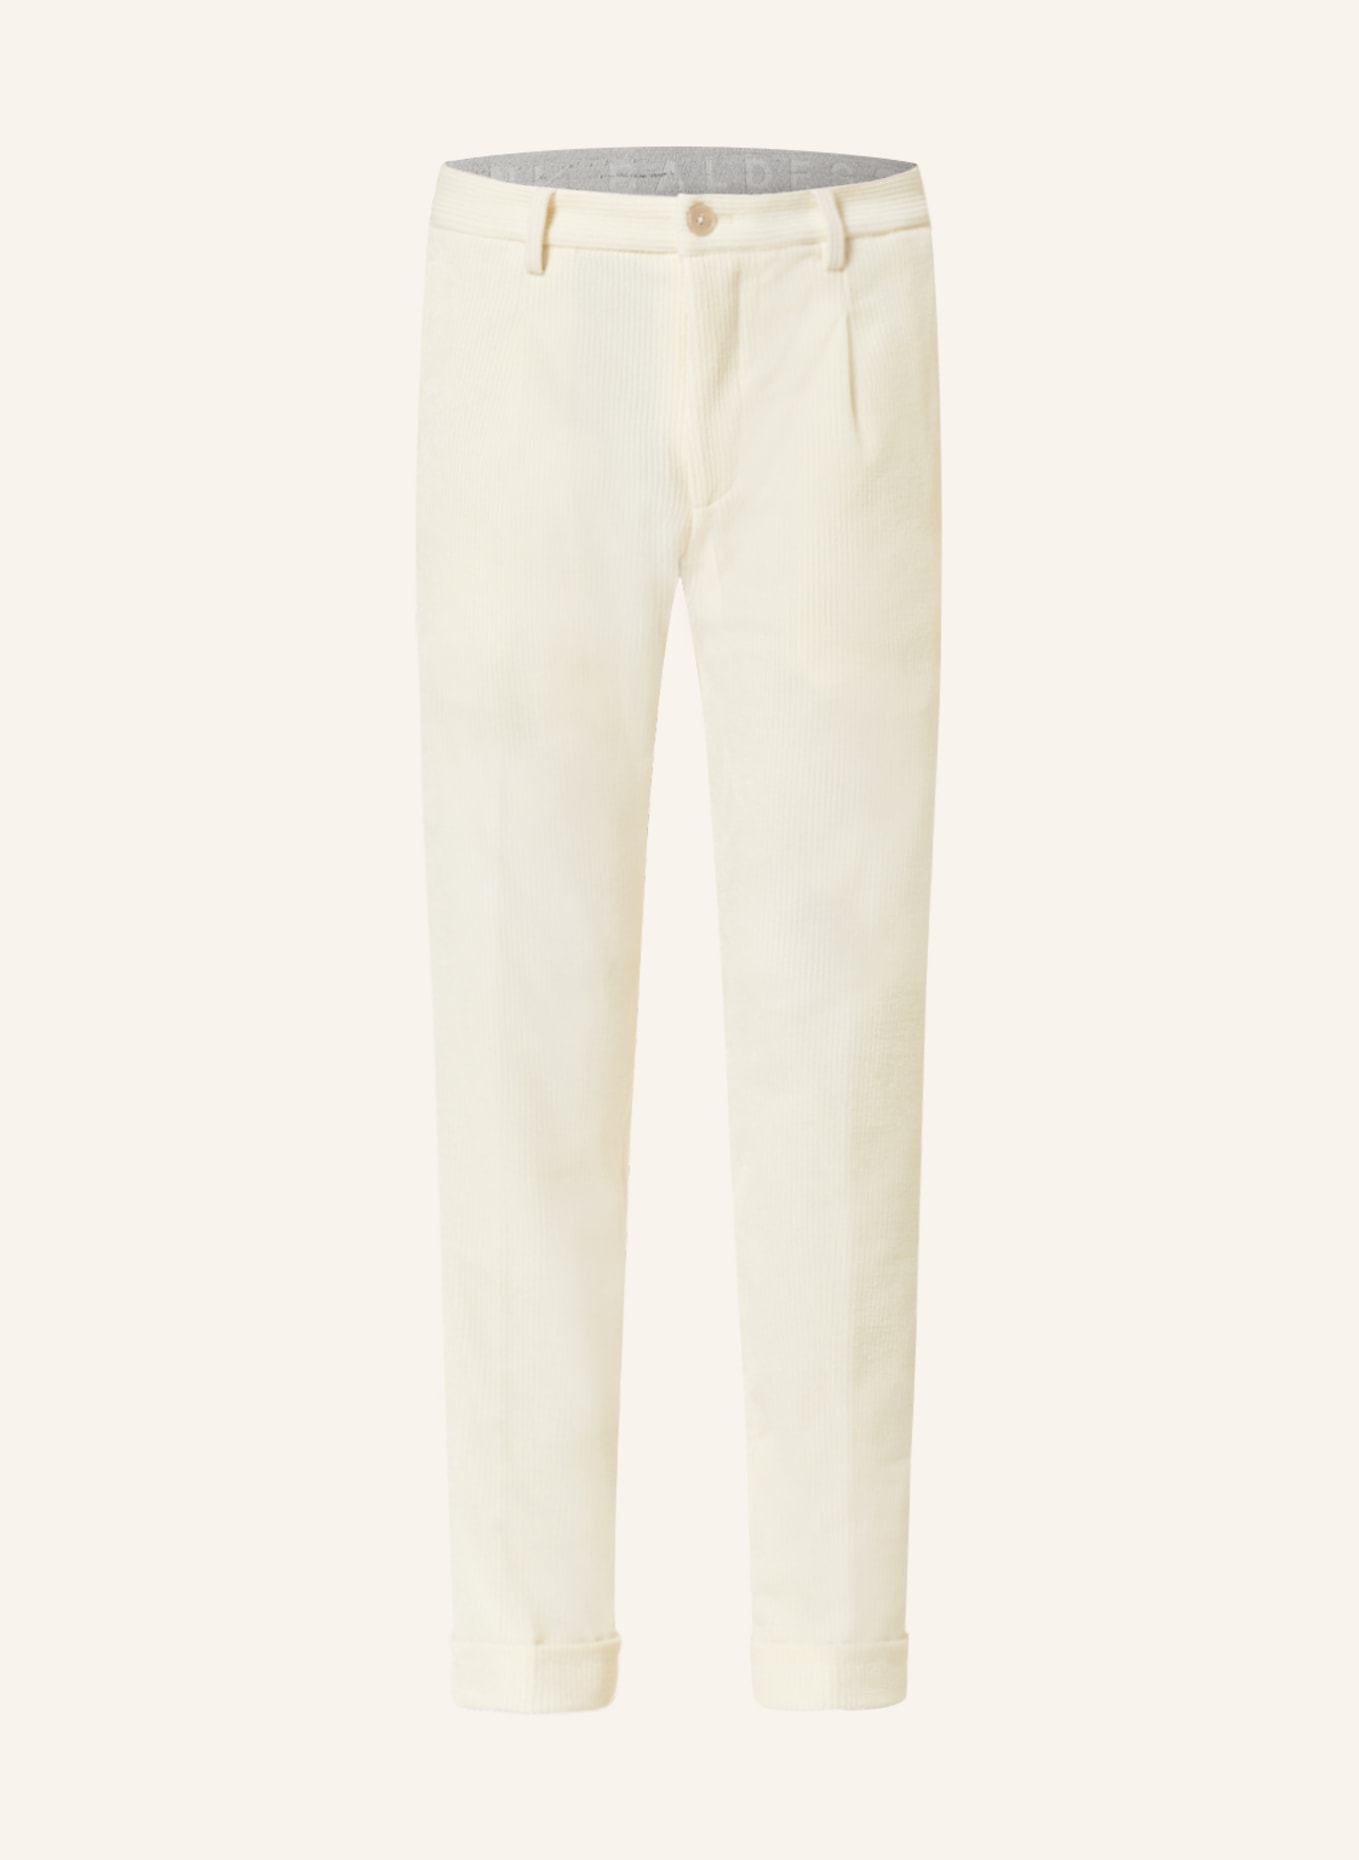 BALDESSARINI Suit trousers extra slim fit in corduroy, Color: ECRU (Image 1)